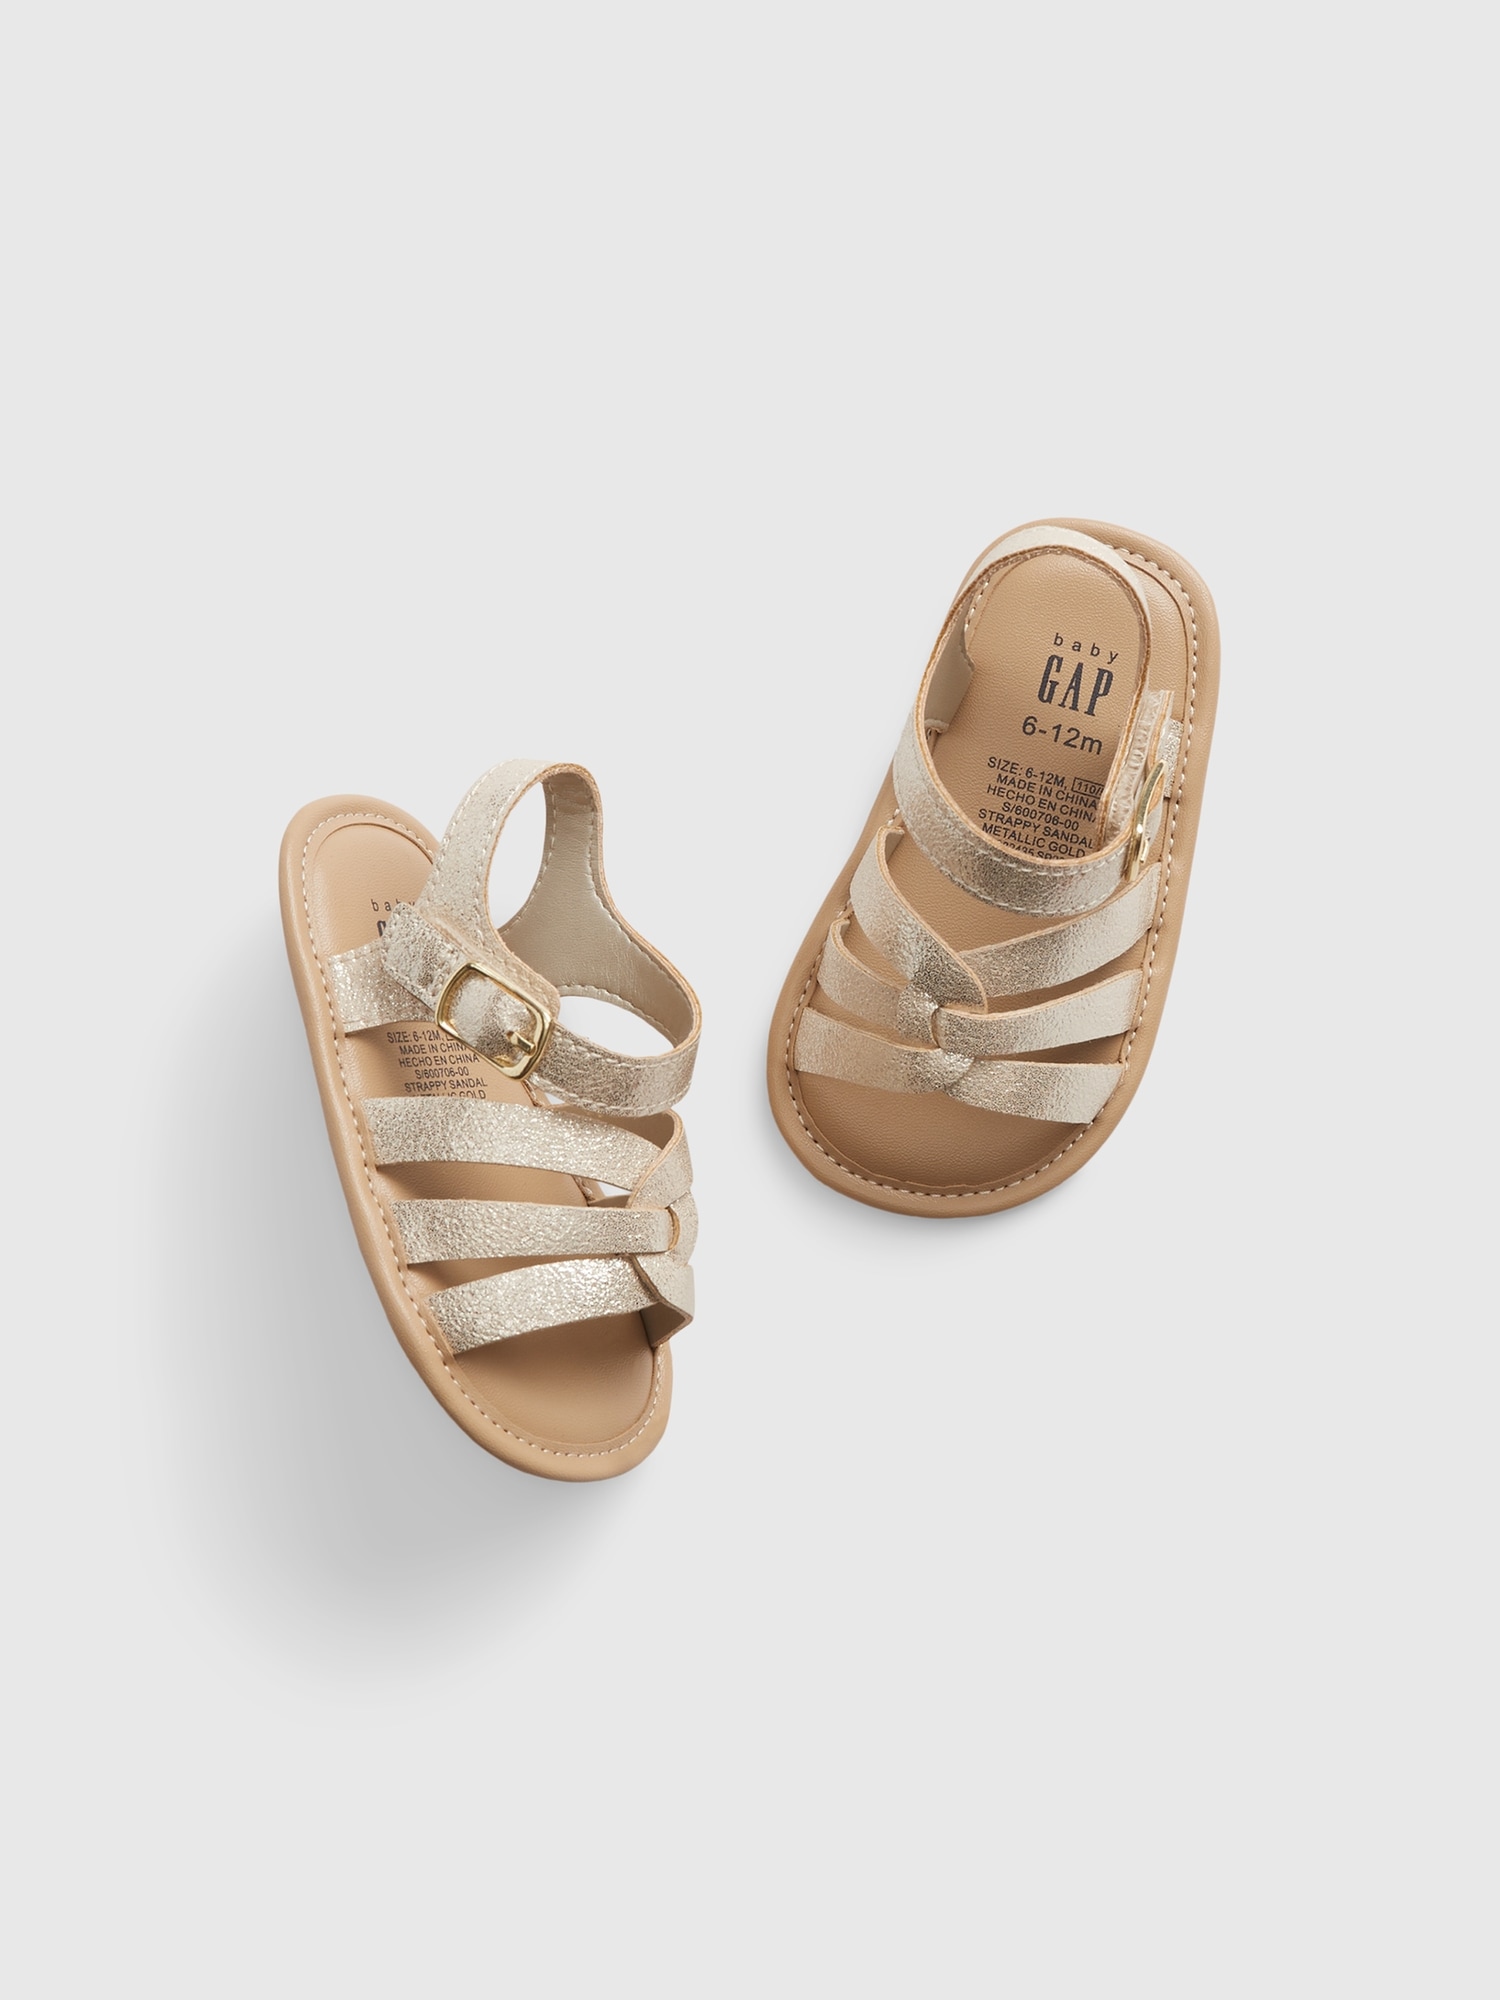 Gap Baby Strappy Sandals In Metallic Gold